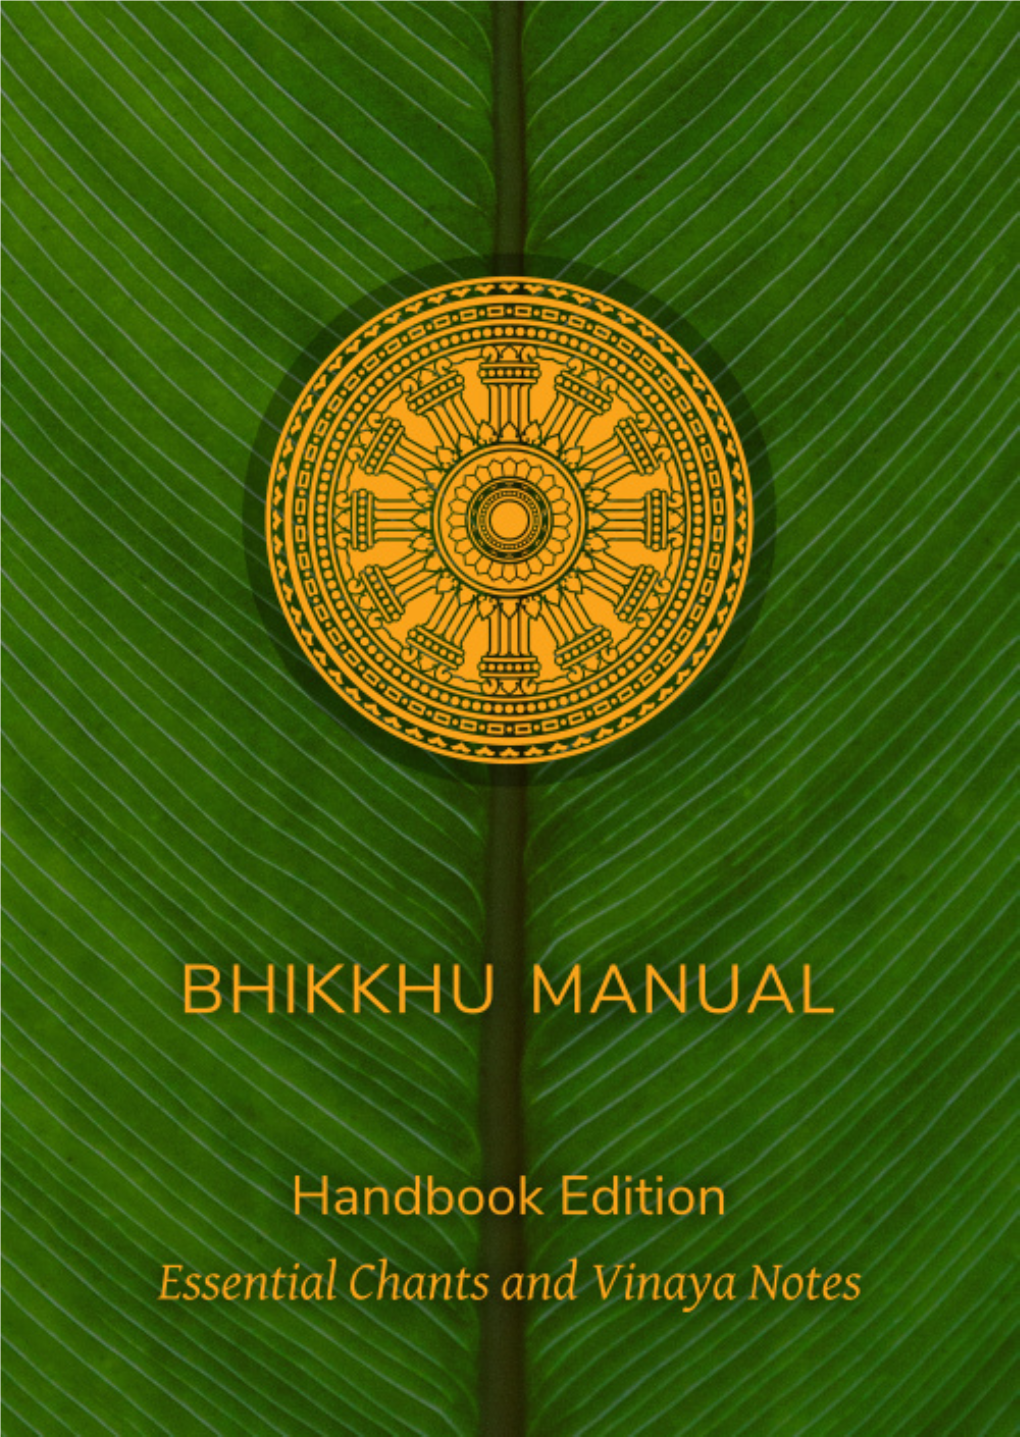 Bhikkhu Manual Essential Chants and Vinaya Notes Handbook Edition